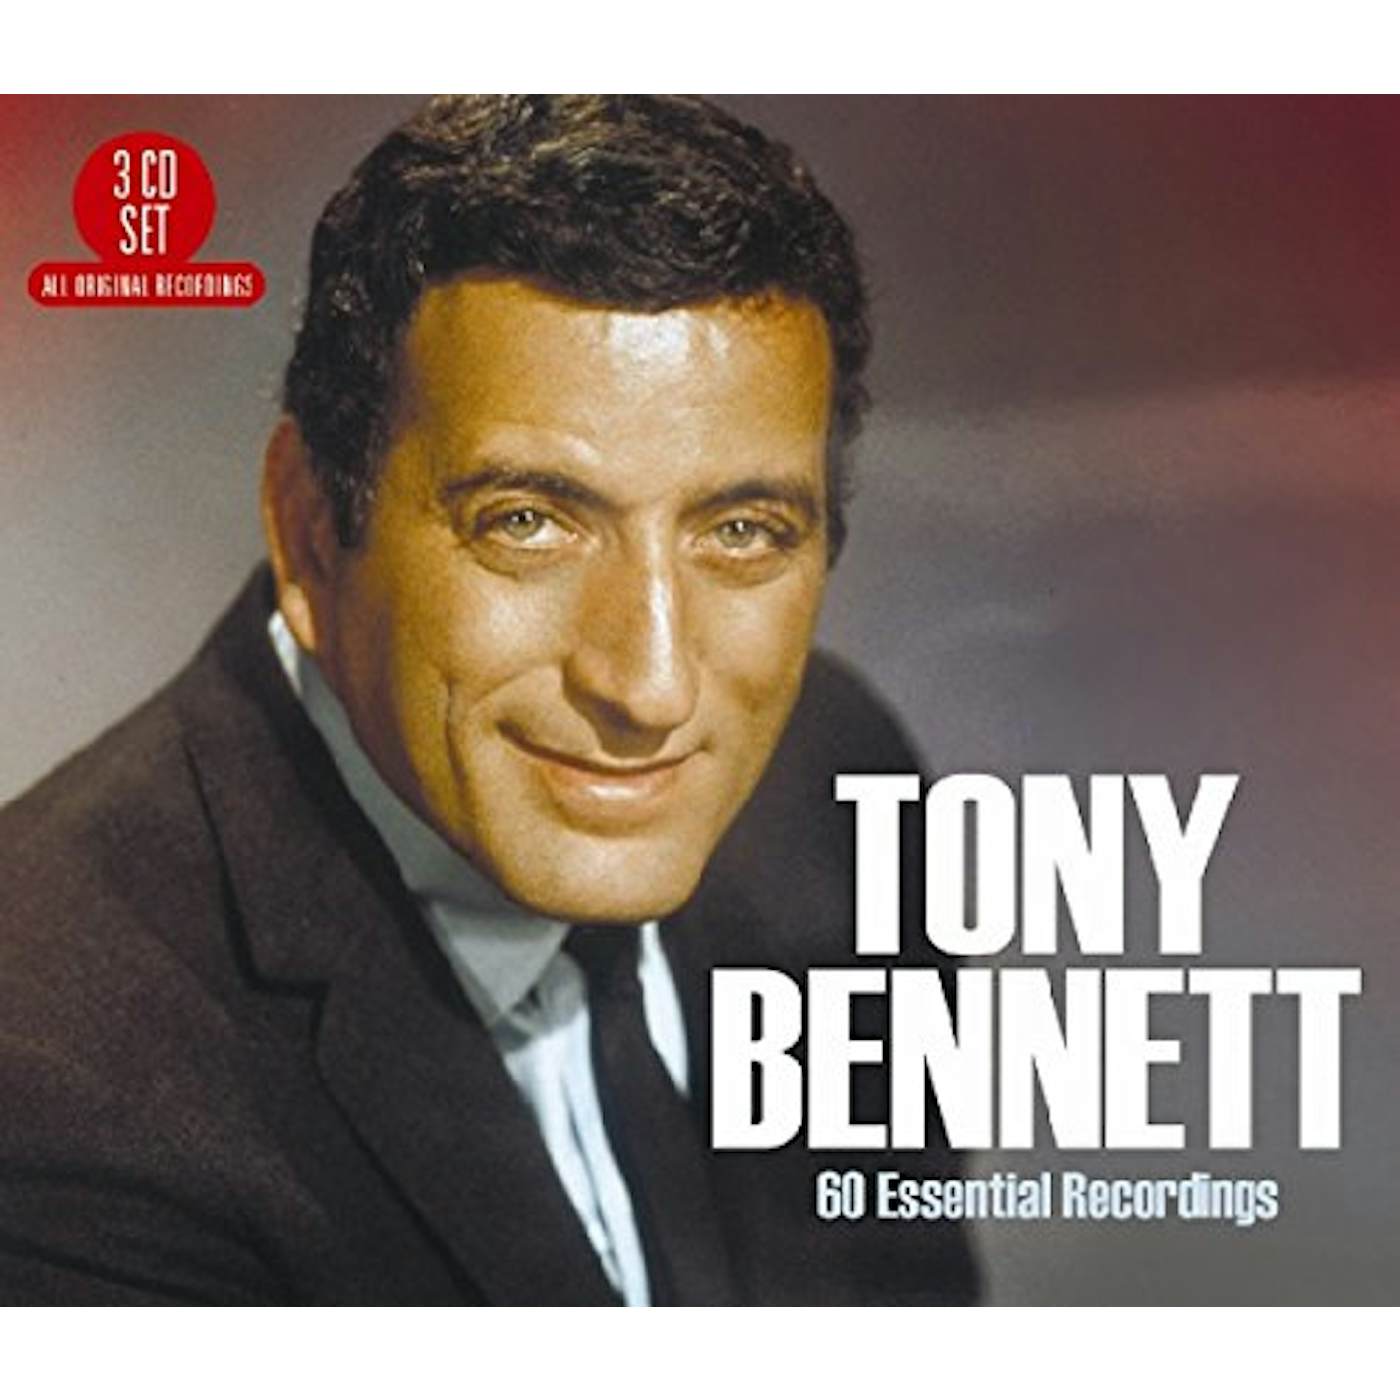 Tony Bennett 60 ESSENTIAL RECORDINGS CD